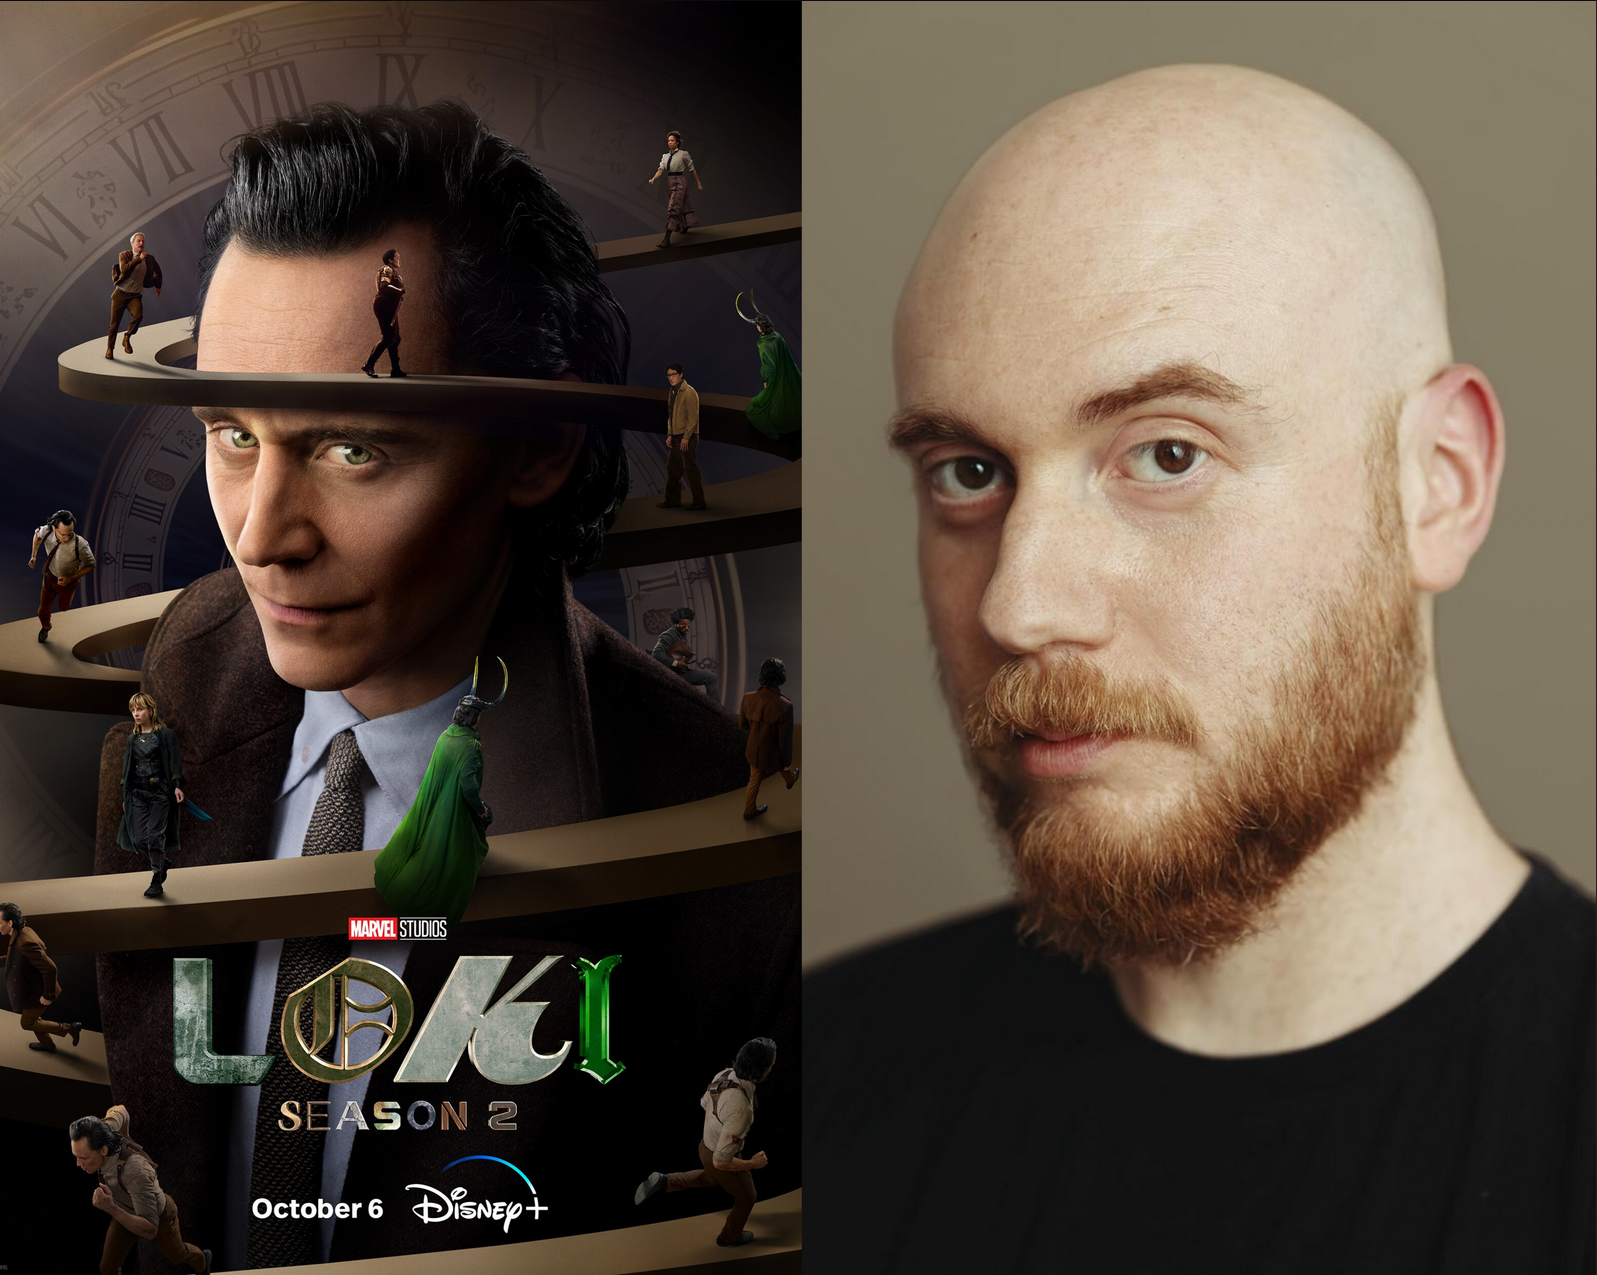 Loki season 2 cinematographer Isaac Bauman